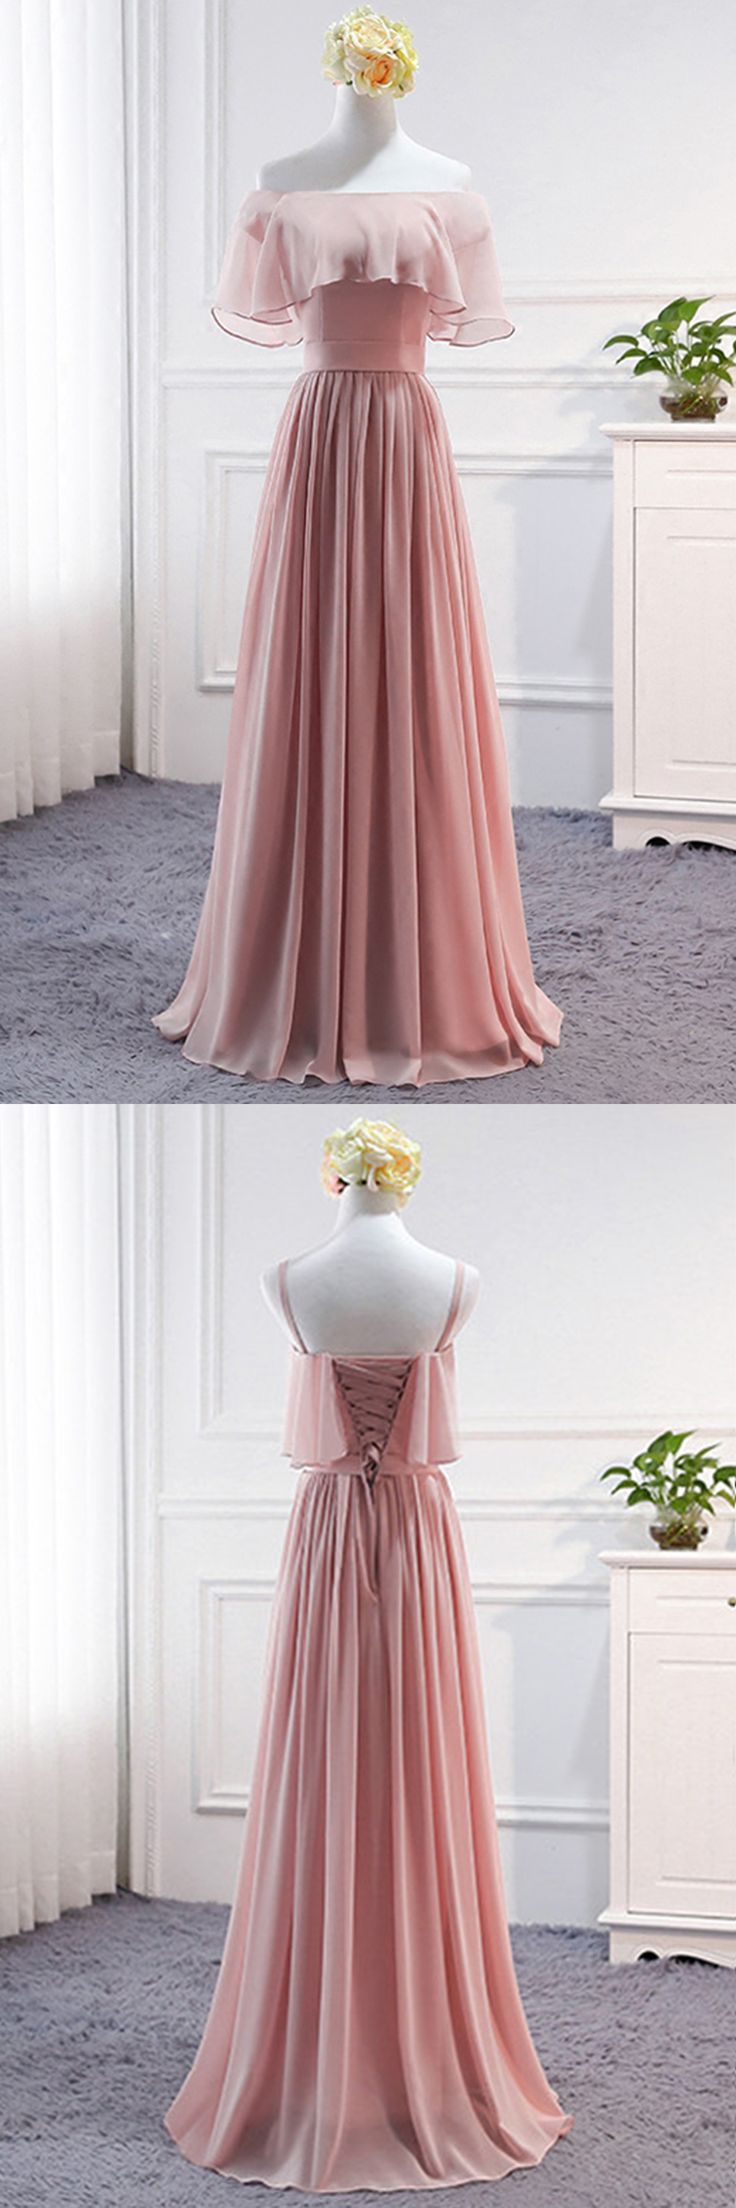 Pink Long Chiffon Bridesmaid Dress,Mismatched Wedding Party Dresses ...